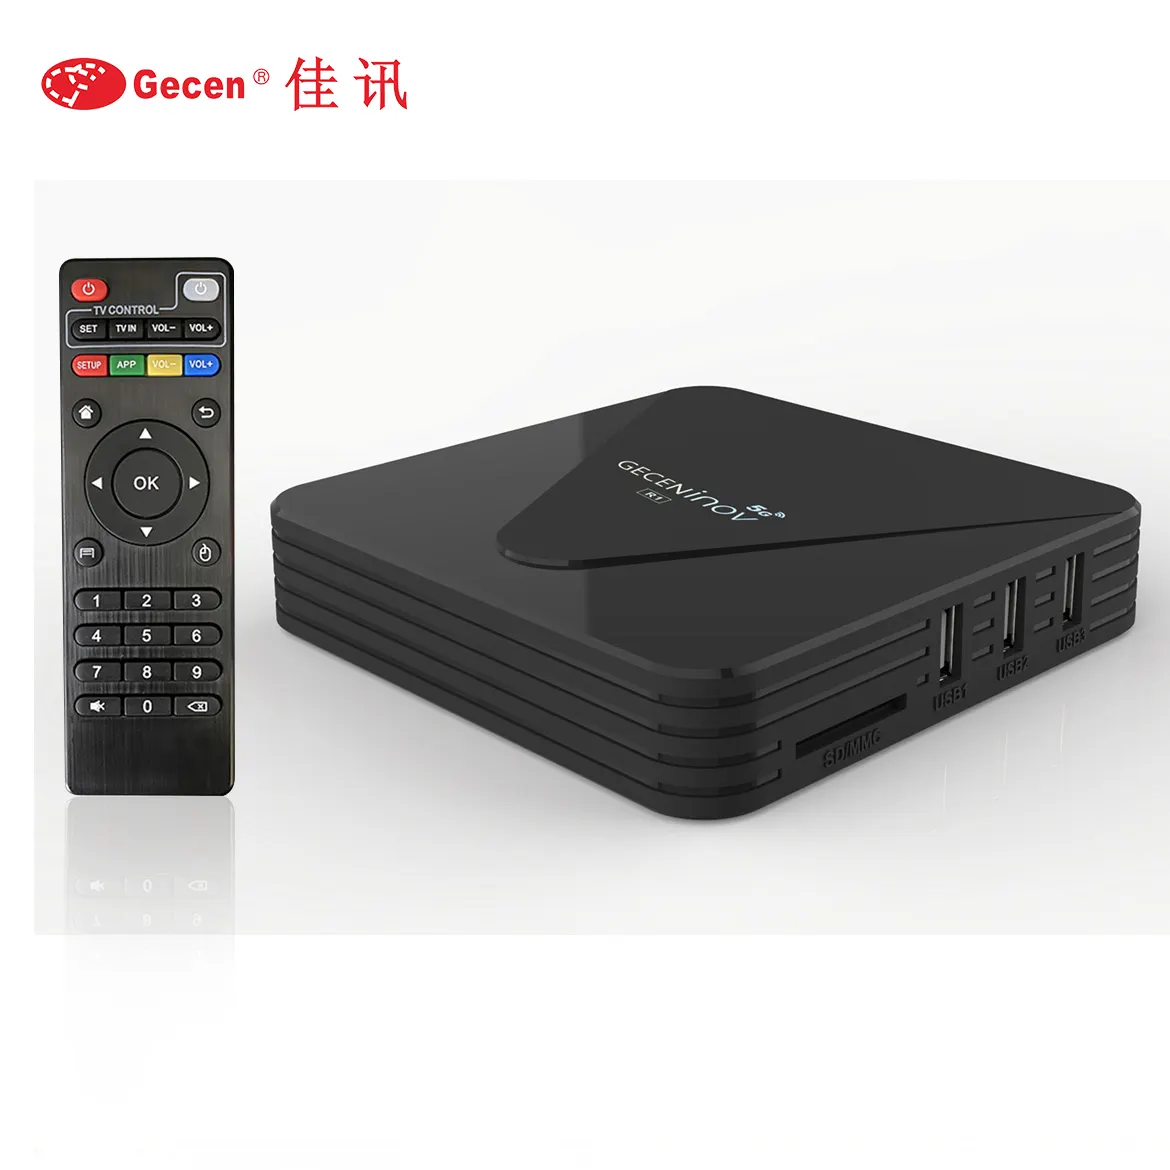 Original manufacturer wholesale smart TV BOX WiFi 5G R1 geceninov media player android 10.0 TV box 2G 16G with RK3318 RK3228A